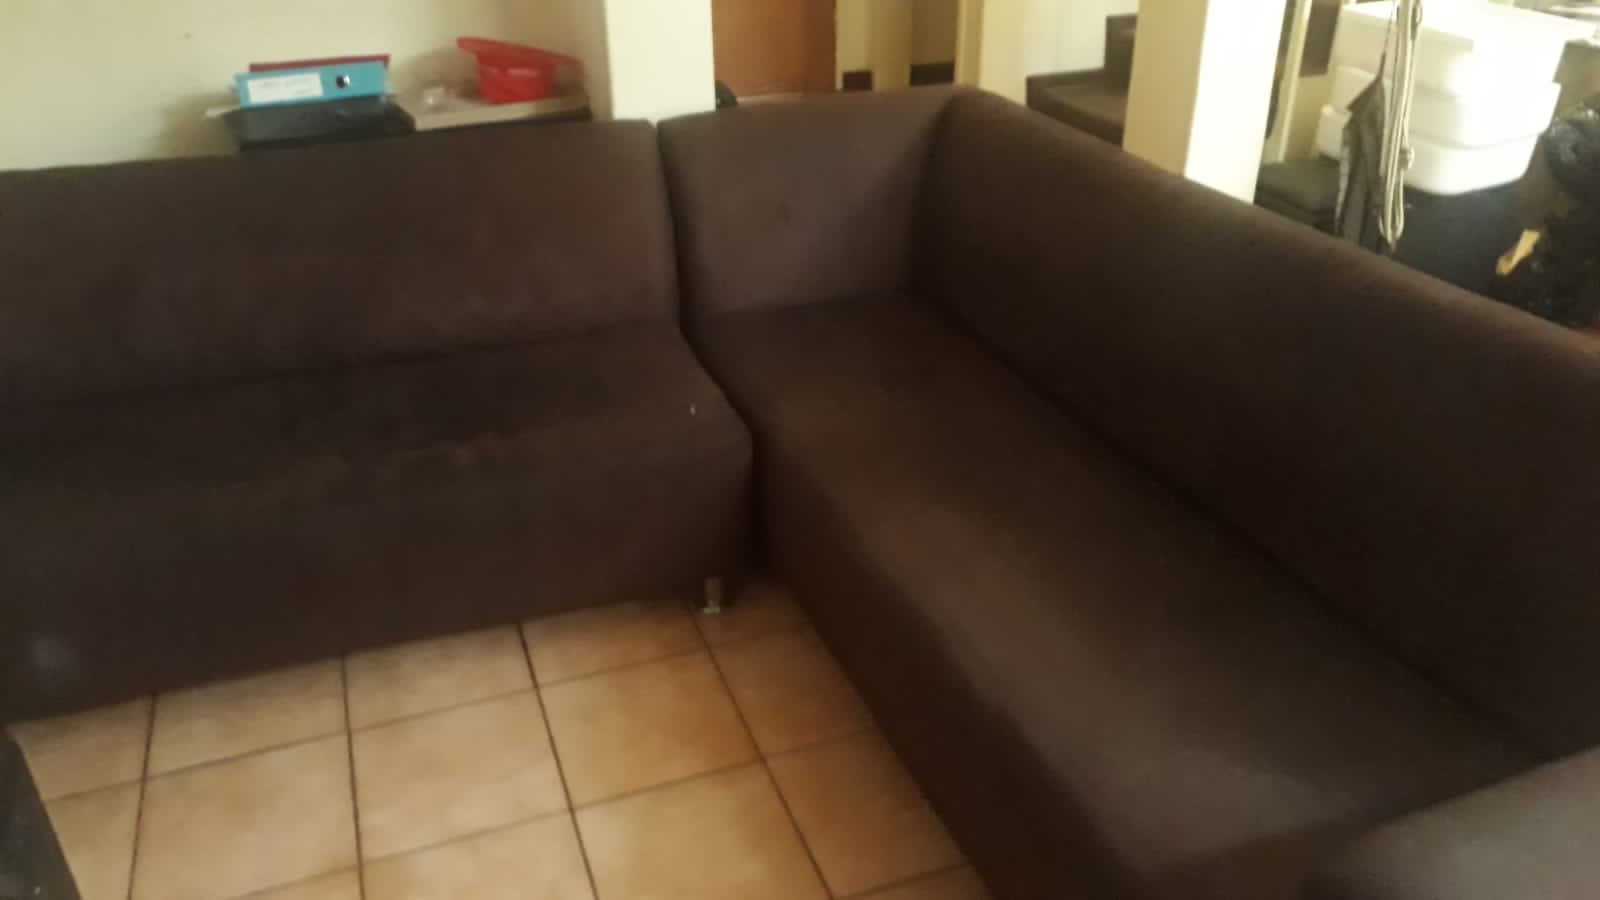 Corner couch unit for sale. Self pickup in parktown estate